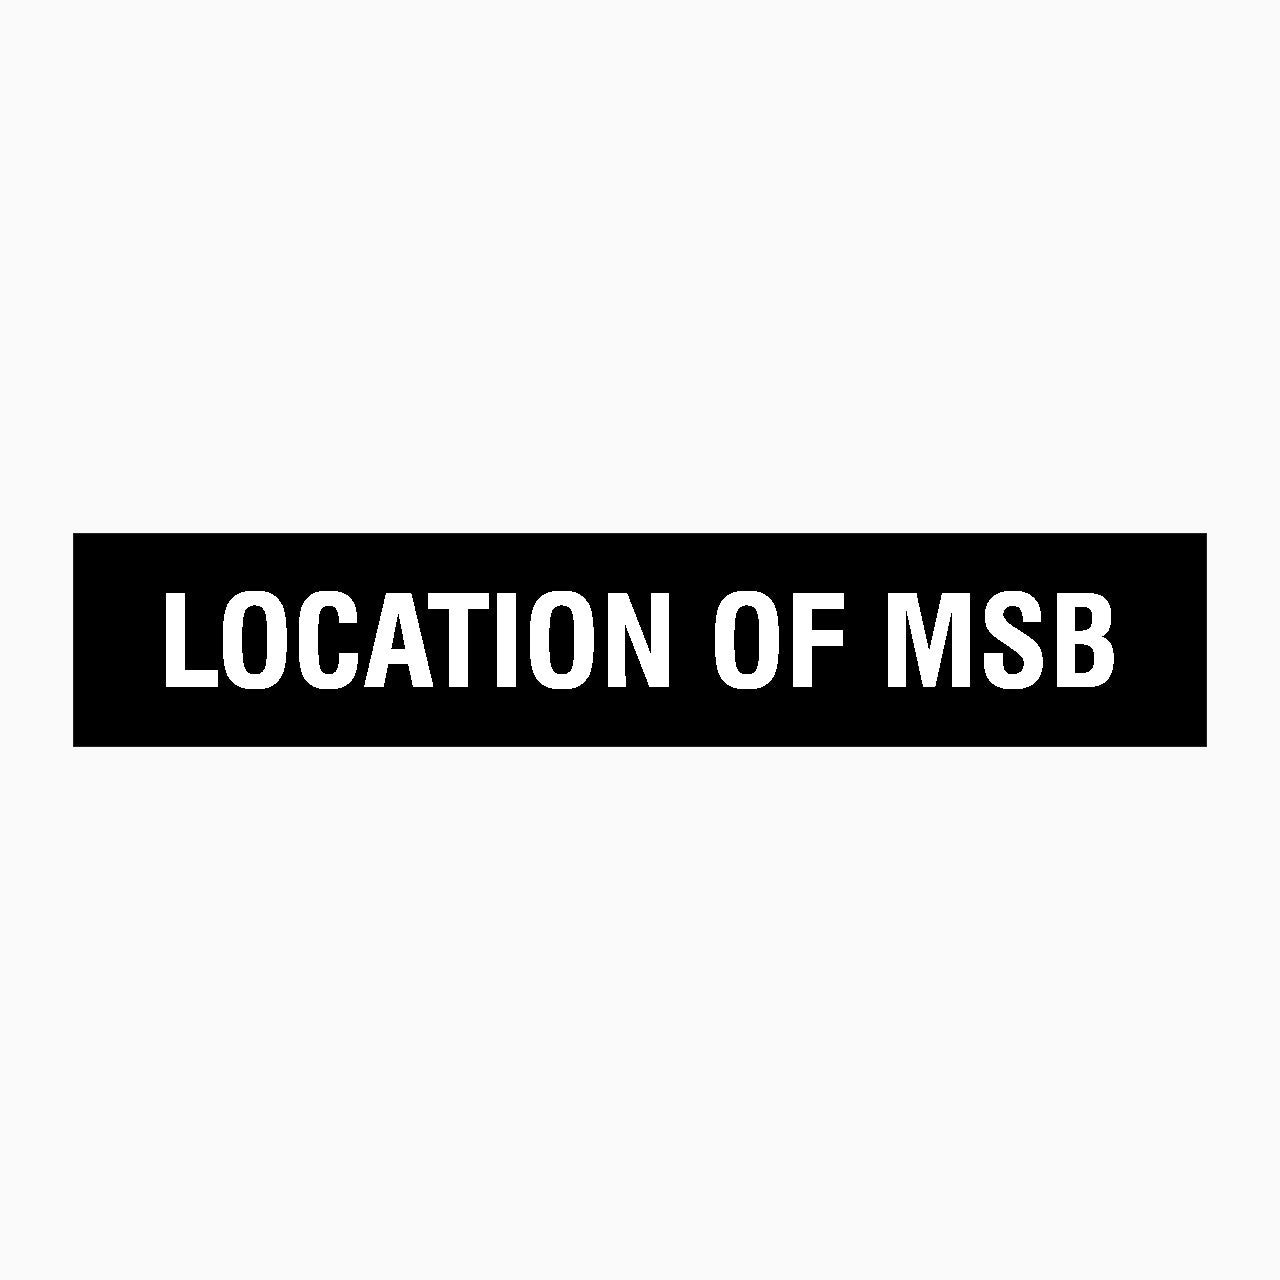 LOCATION OF MSB SIGN